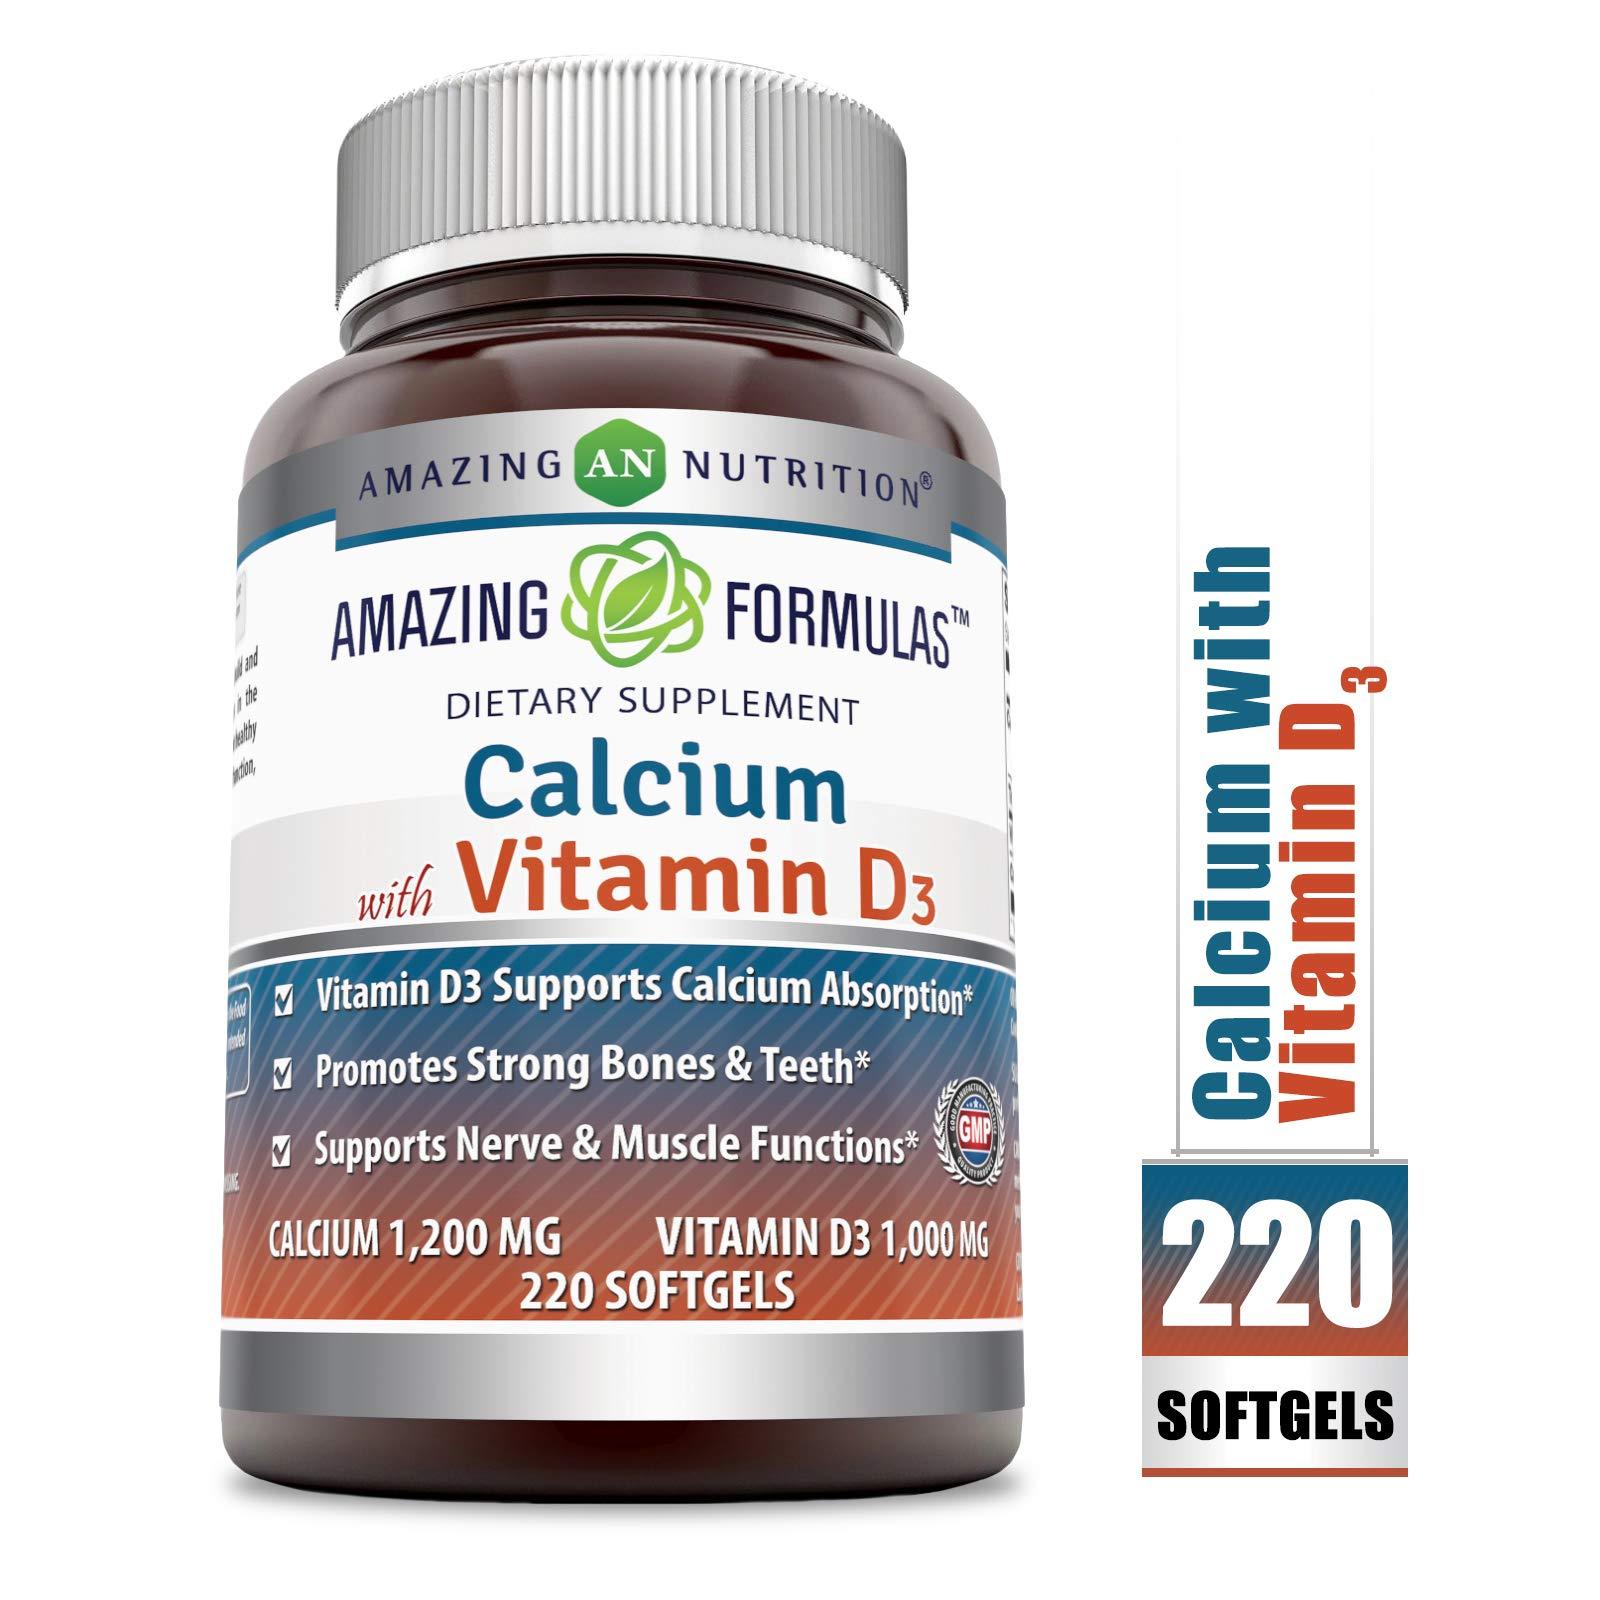 download calcium and vitamin d3